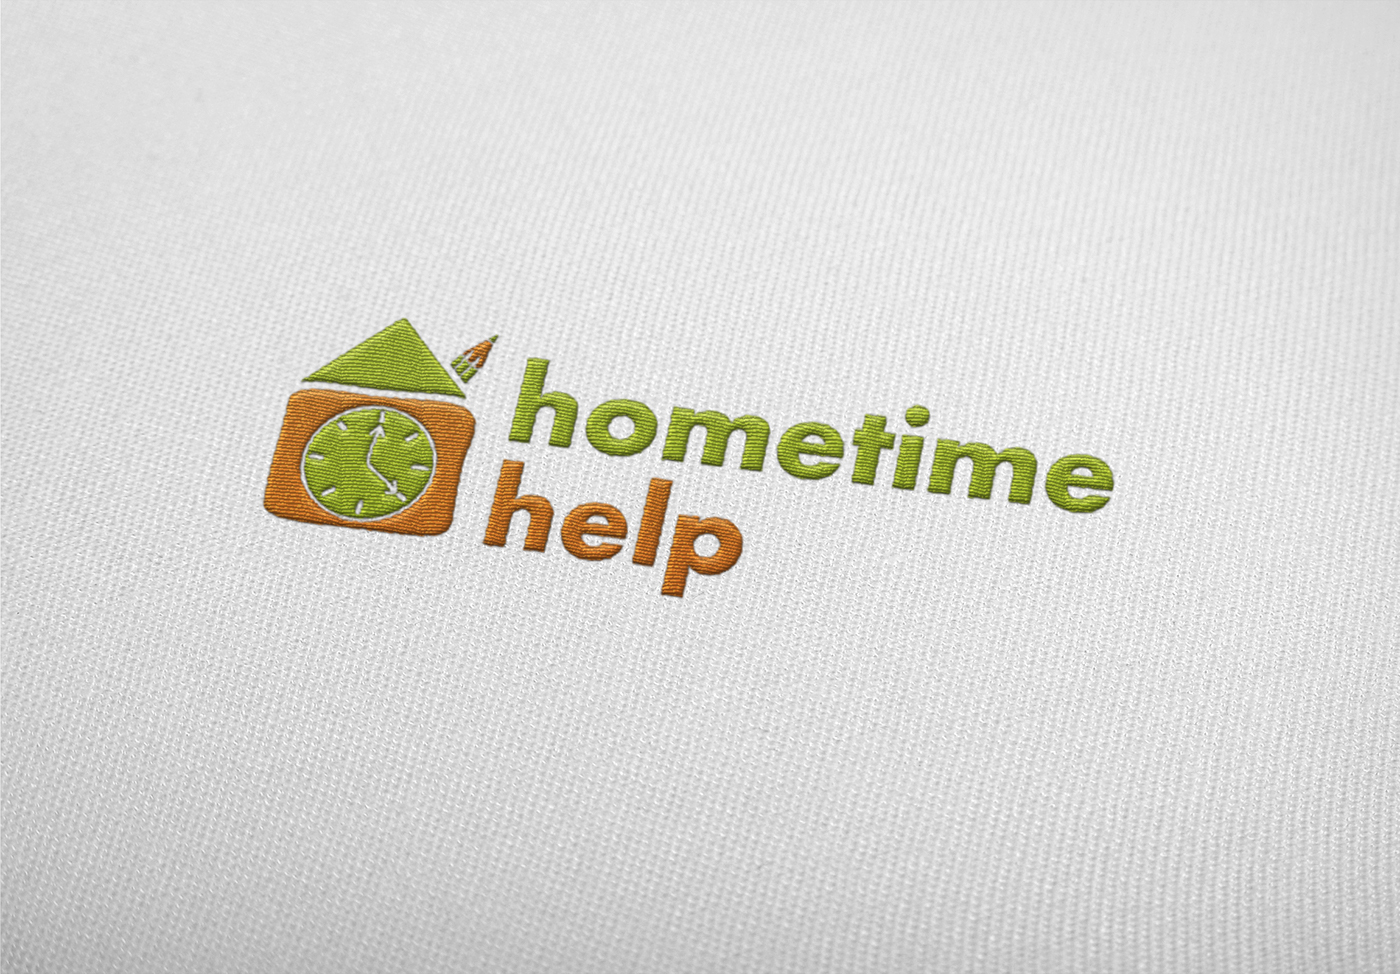 home hometime help school study child logo clock house orange colorful cartoon five teacher afterschool